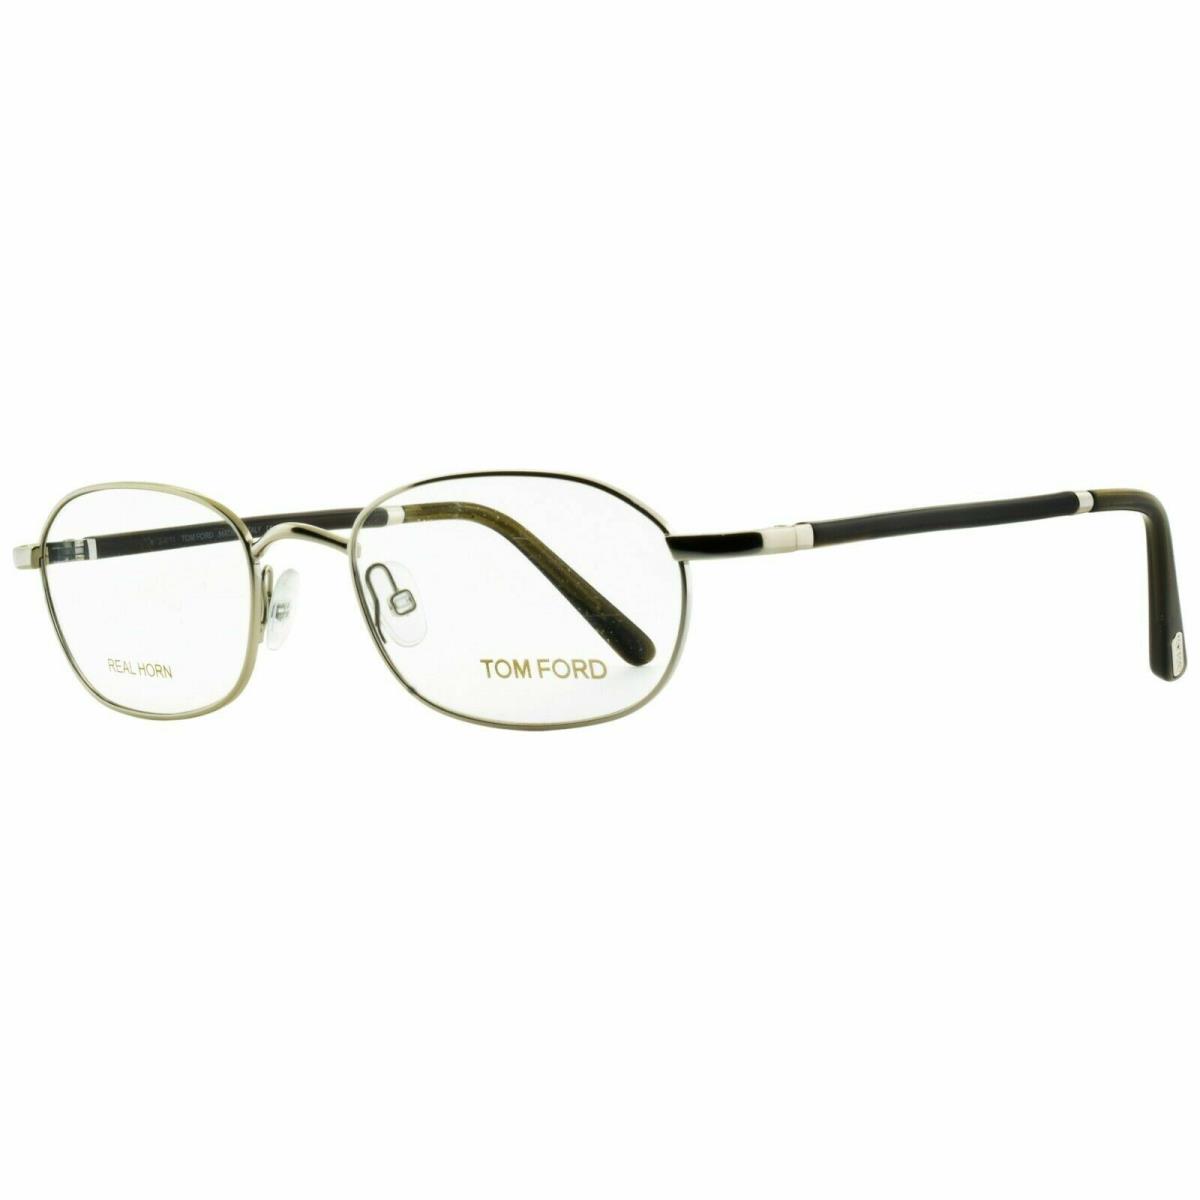 Tom Ford FT5218 016 Silver / Brown Oval Optical Frames Eyeglasses